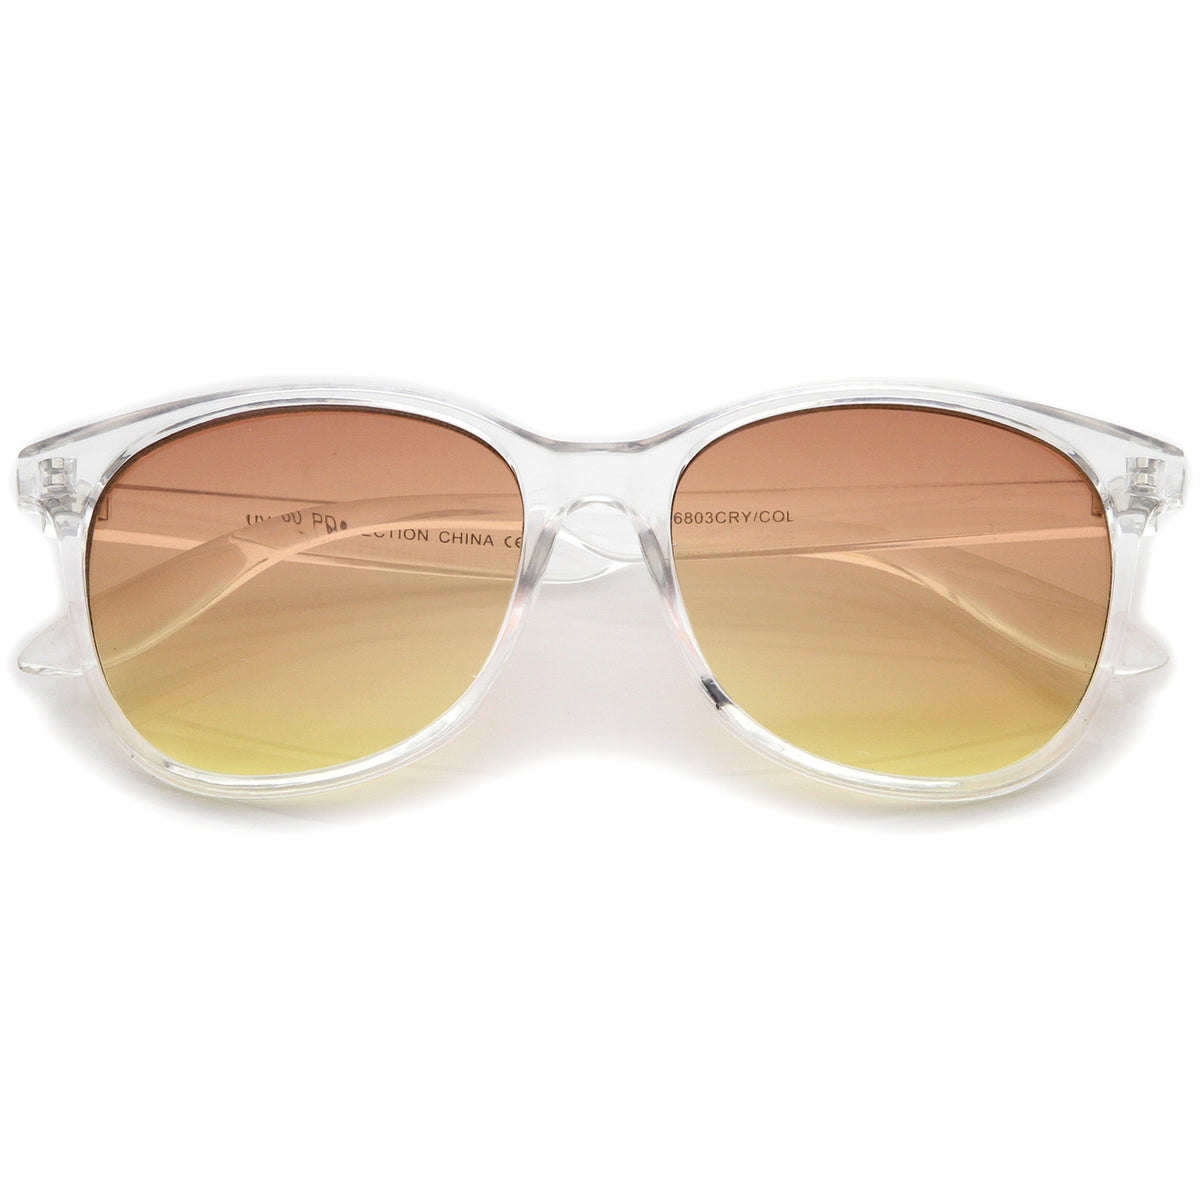 Modern Clear Frame Gradient Flat Lens Horn Rimmed Sunglasses 55mm Sunglass La